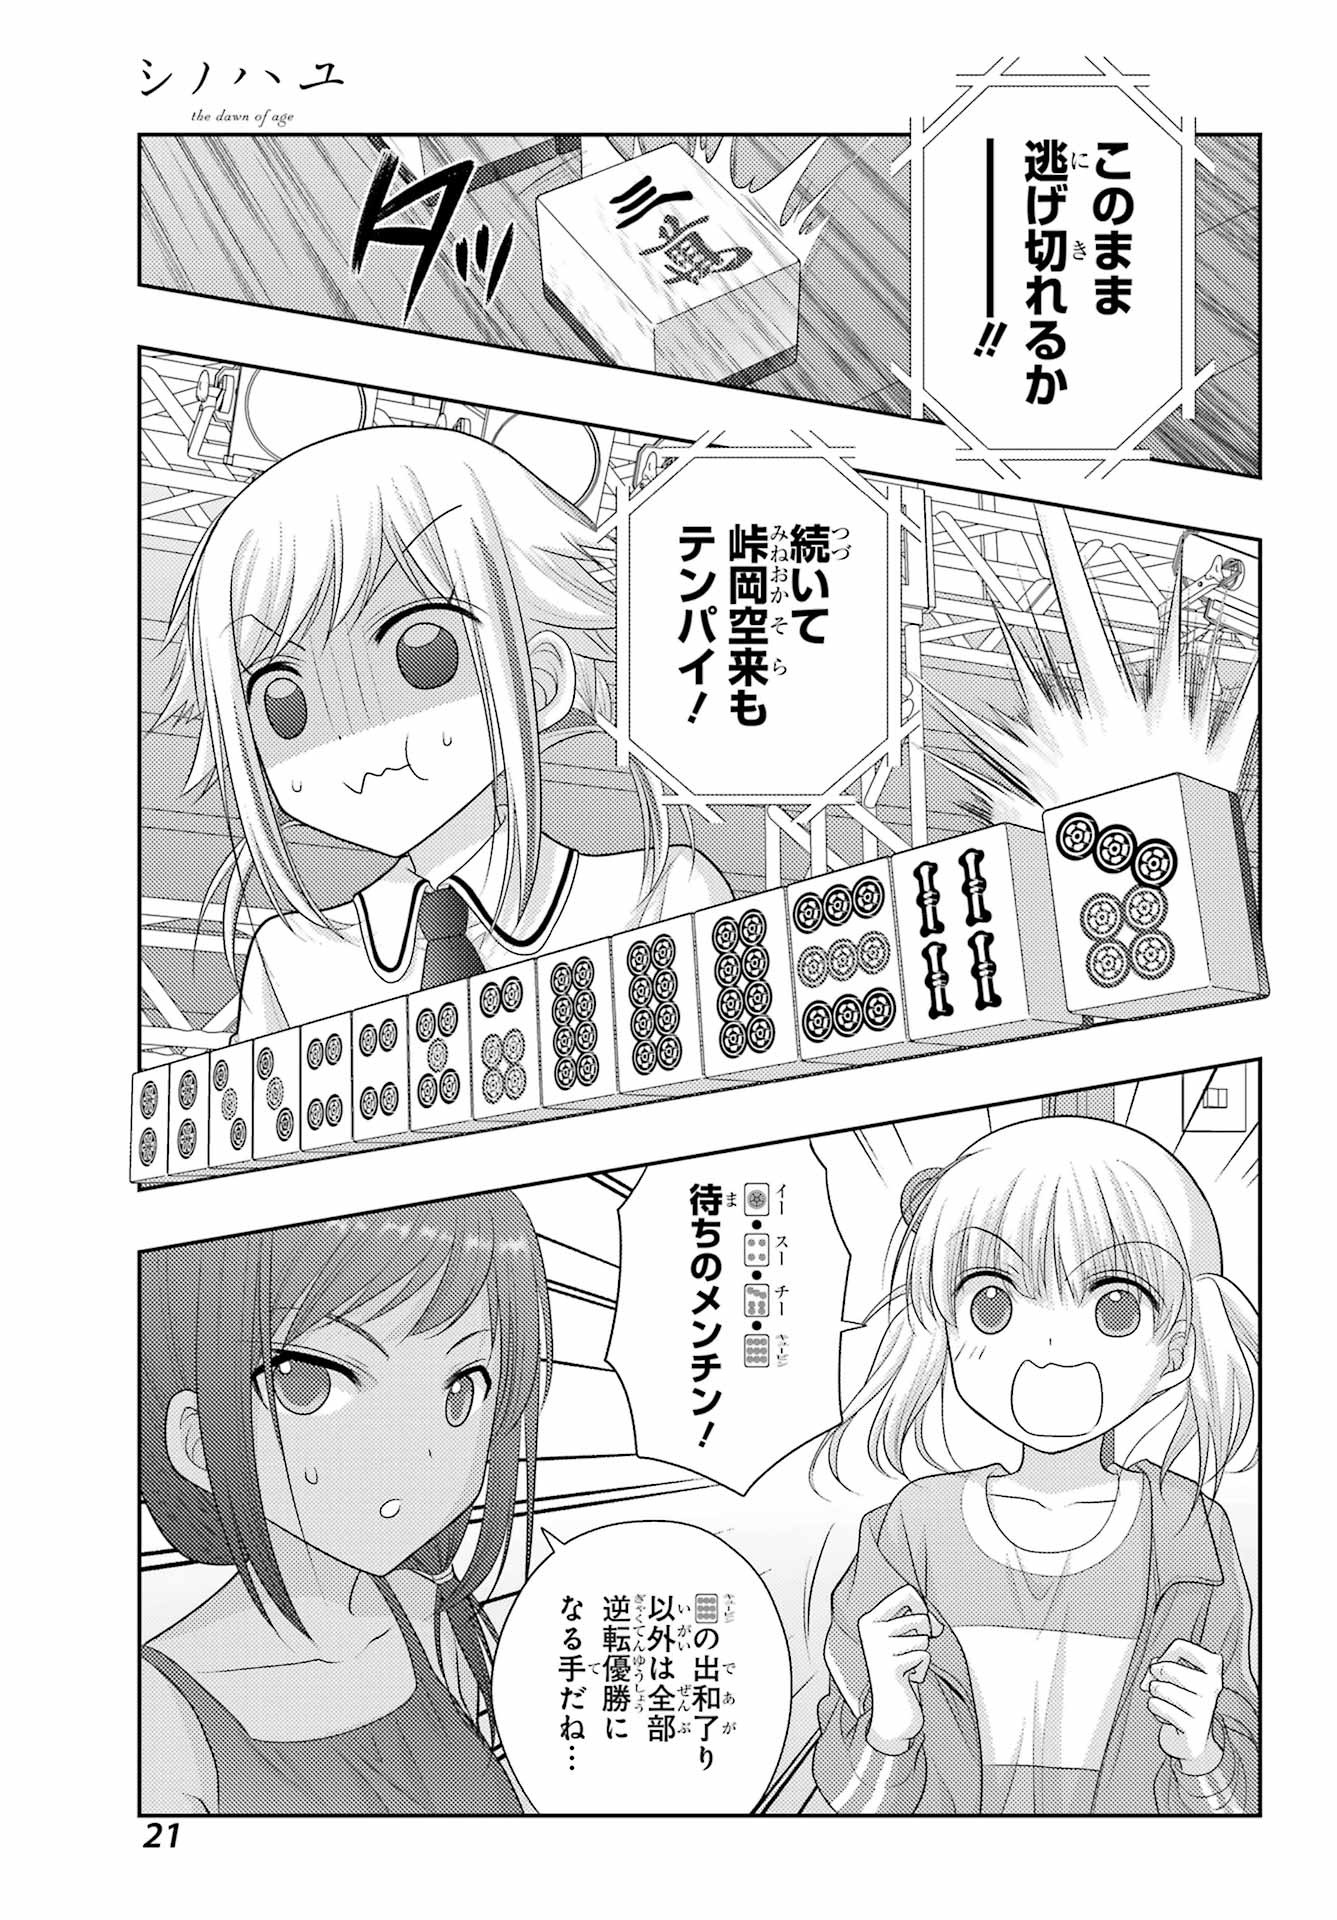 Shinohayu - The Dawn of Age Manga - Chapter 098 - Page 15